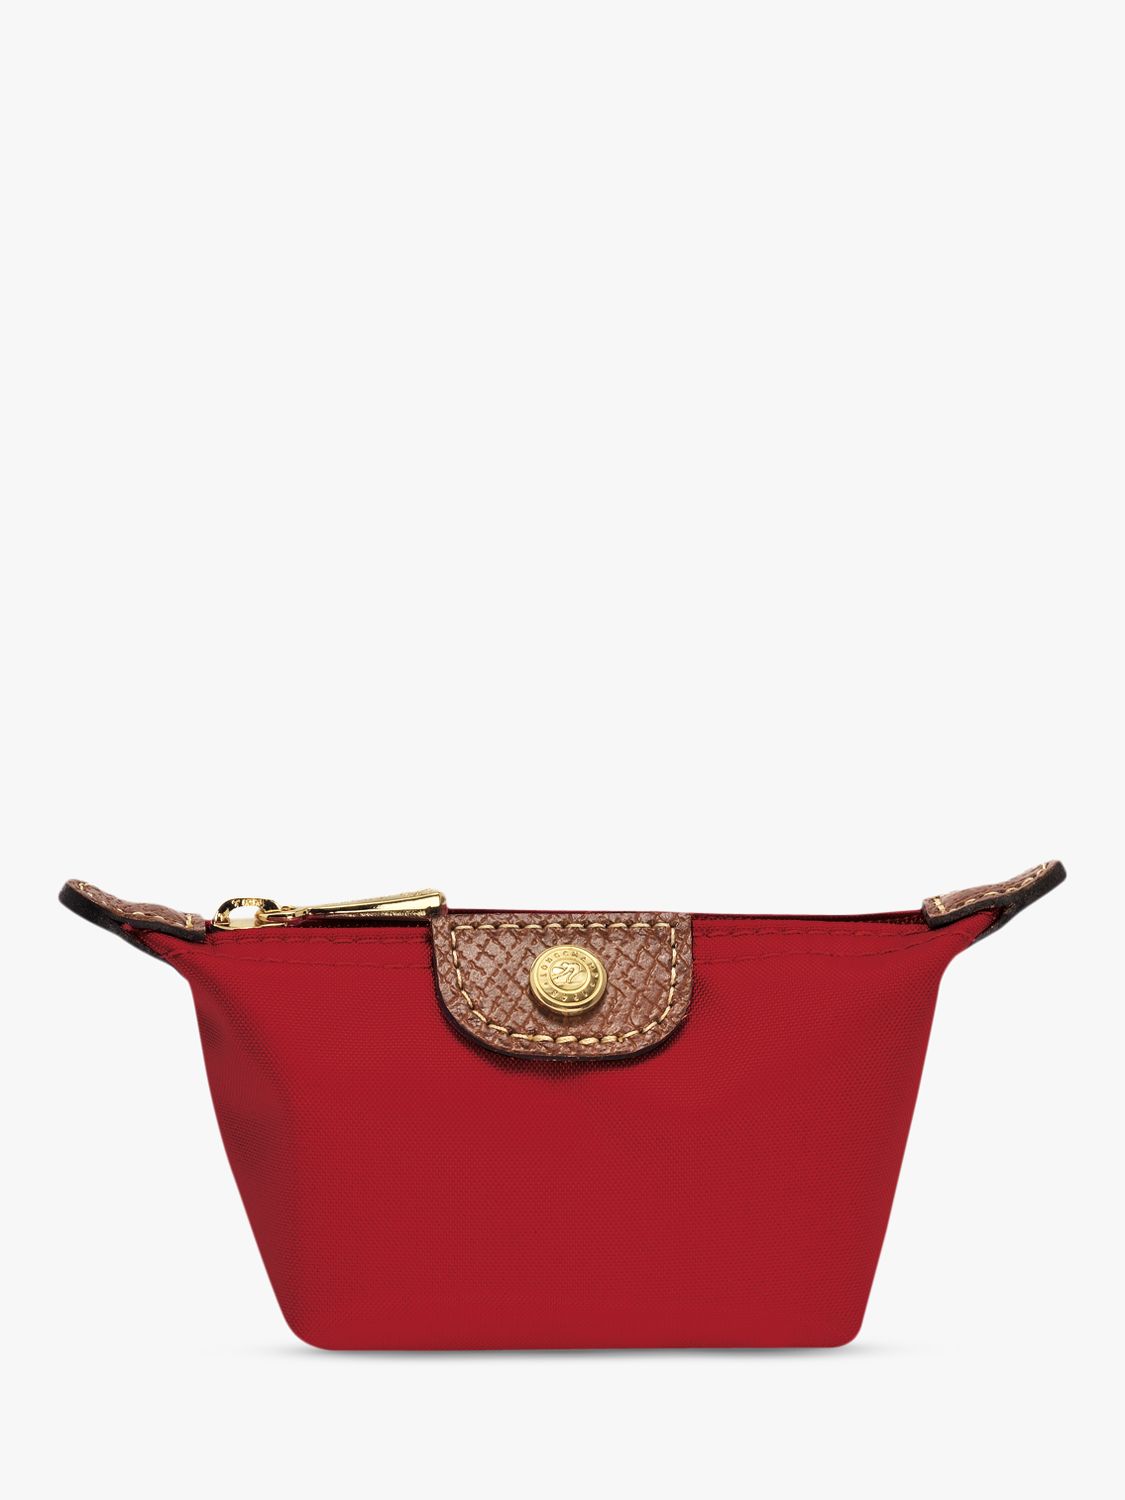 longchamp red purse